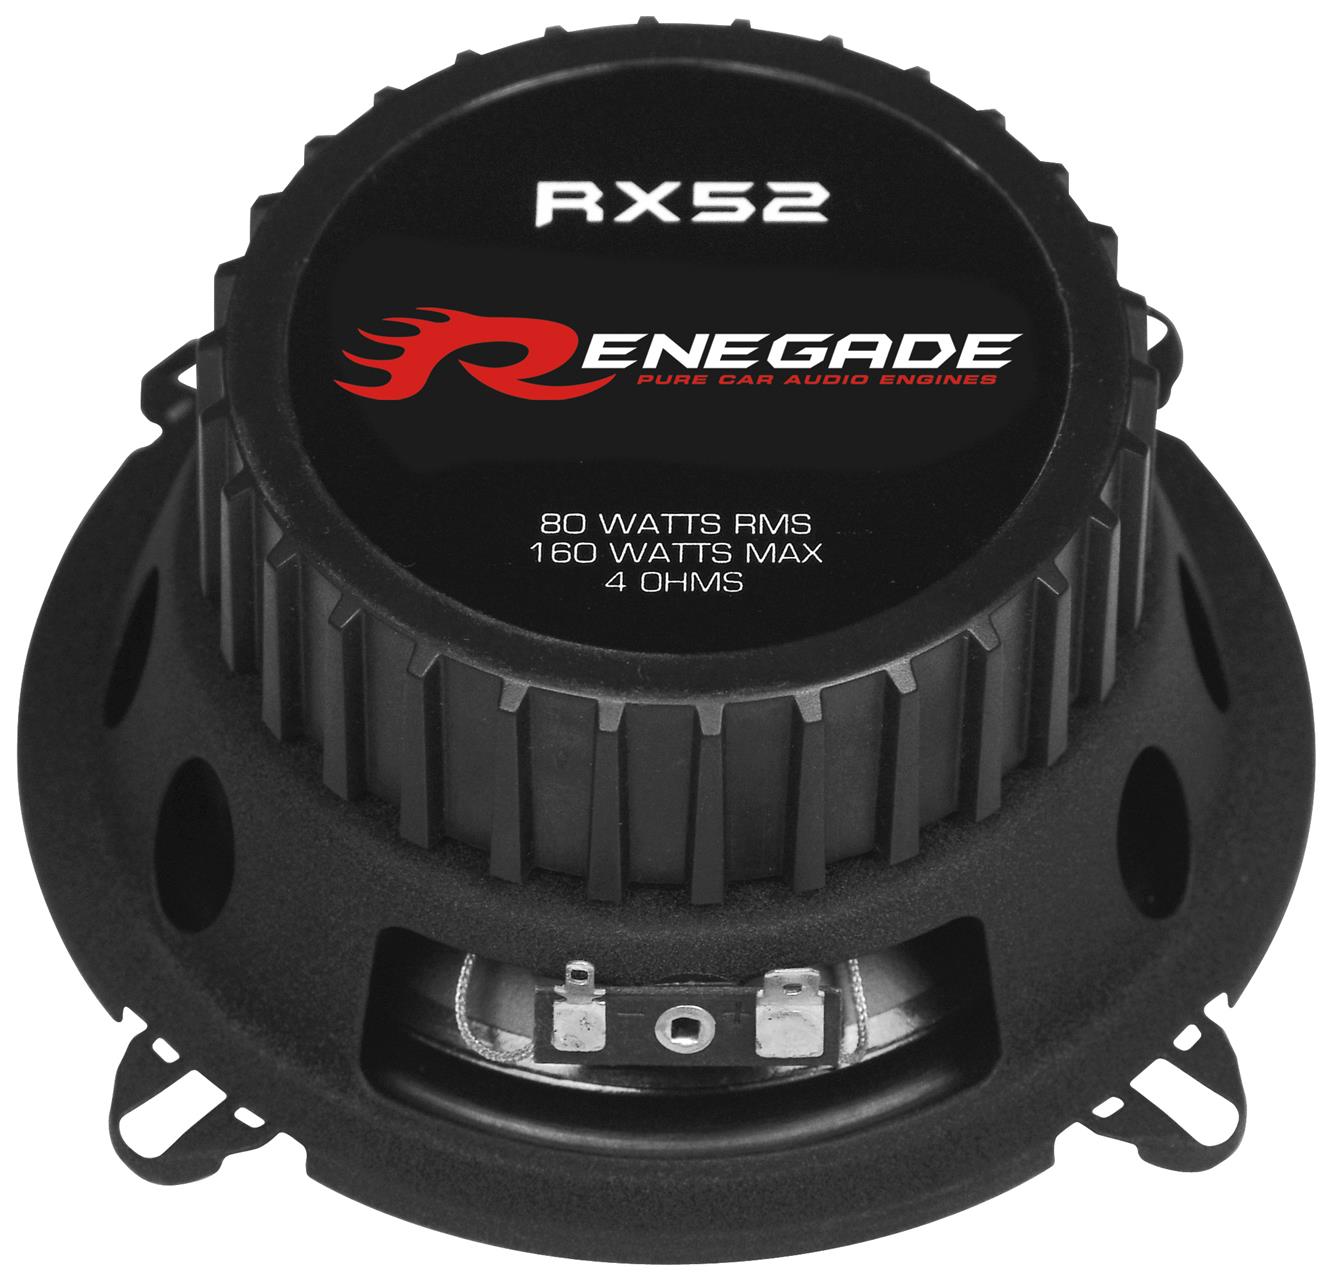 Renegade RX-52